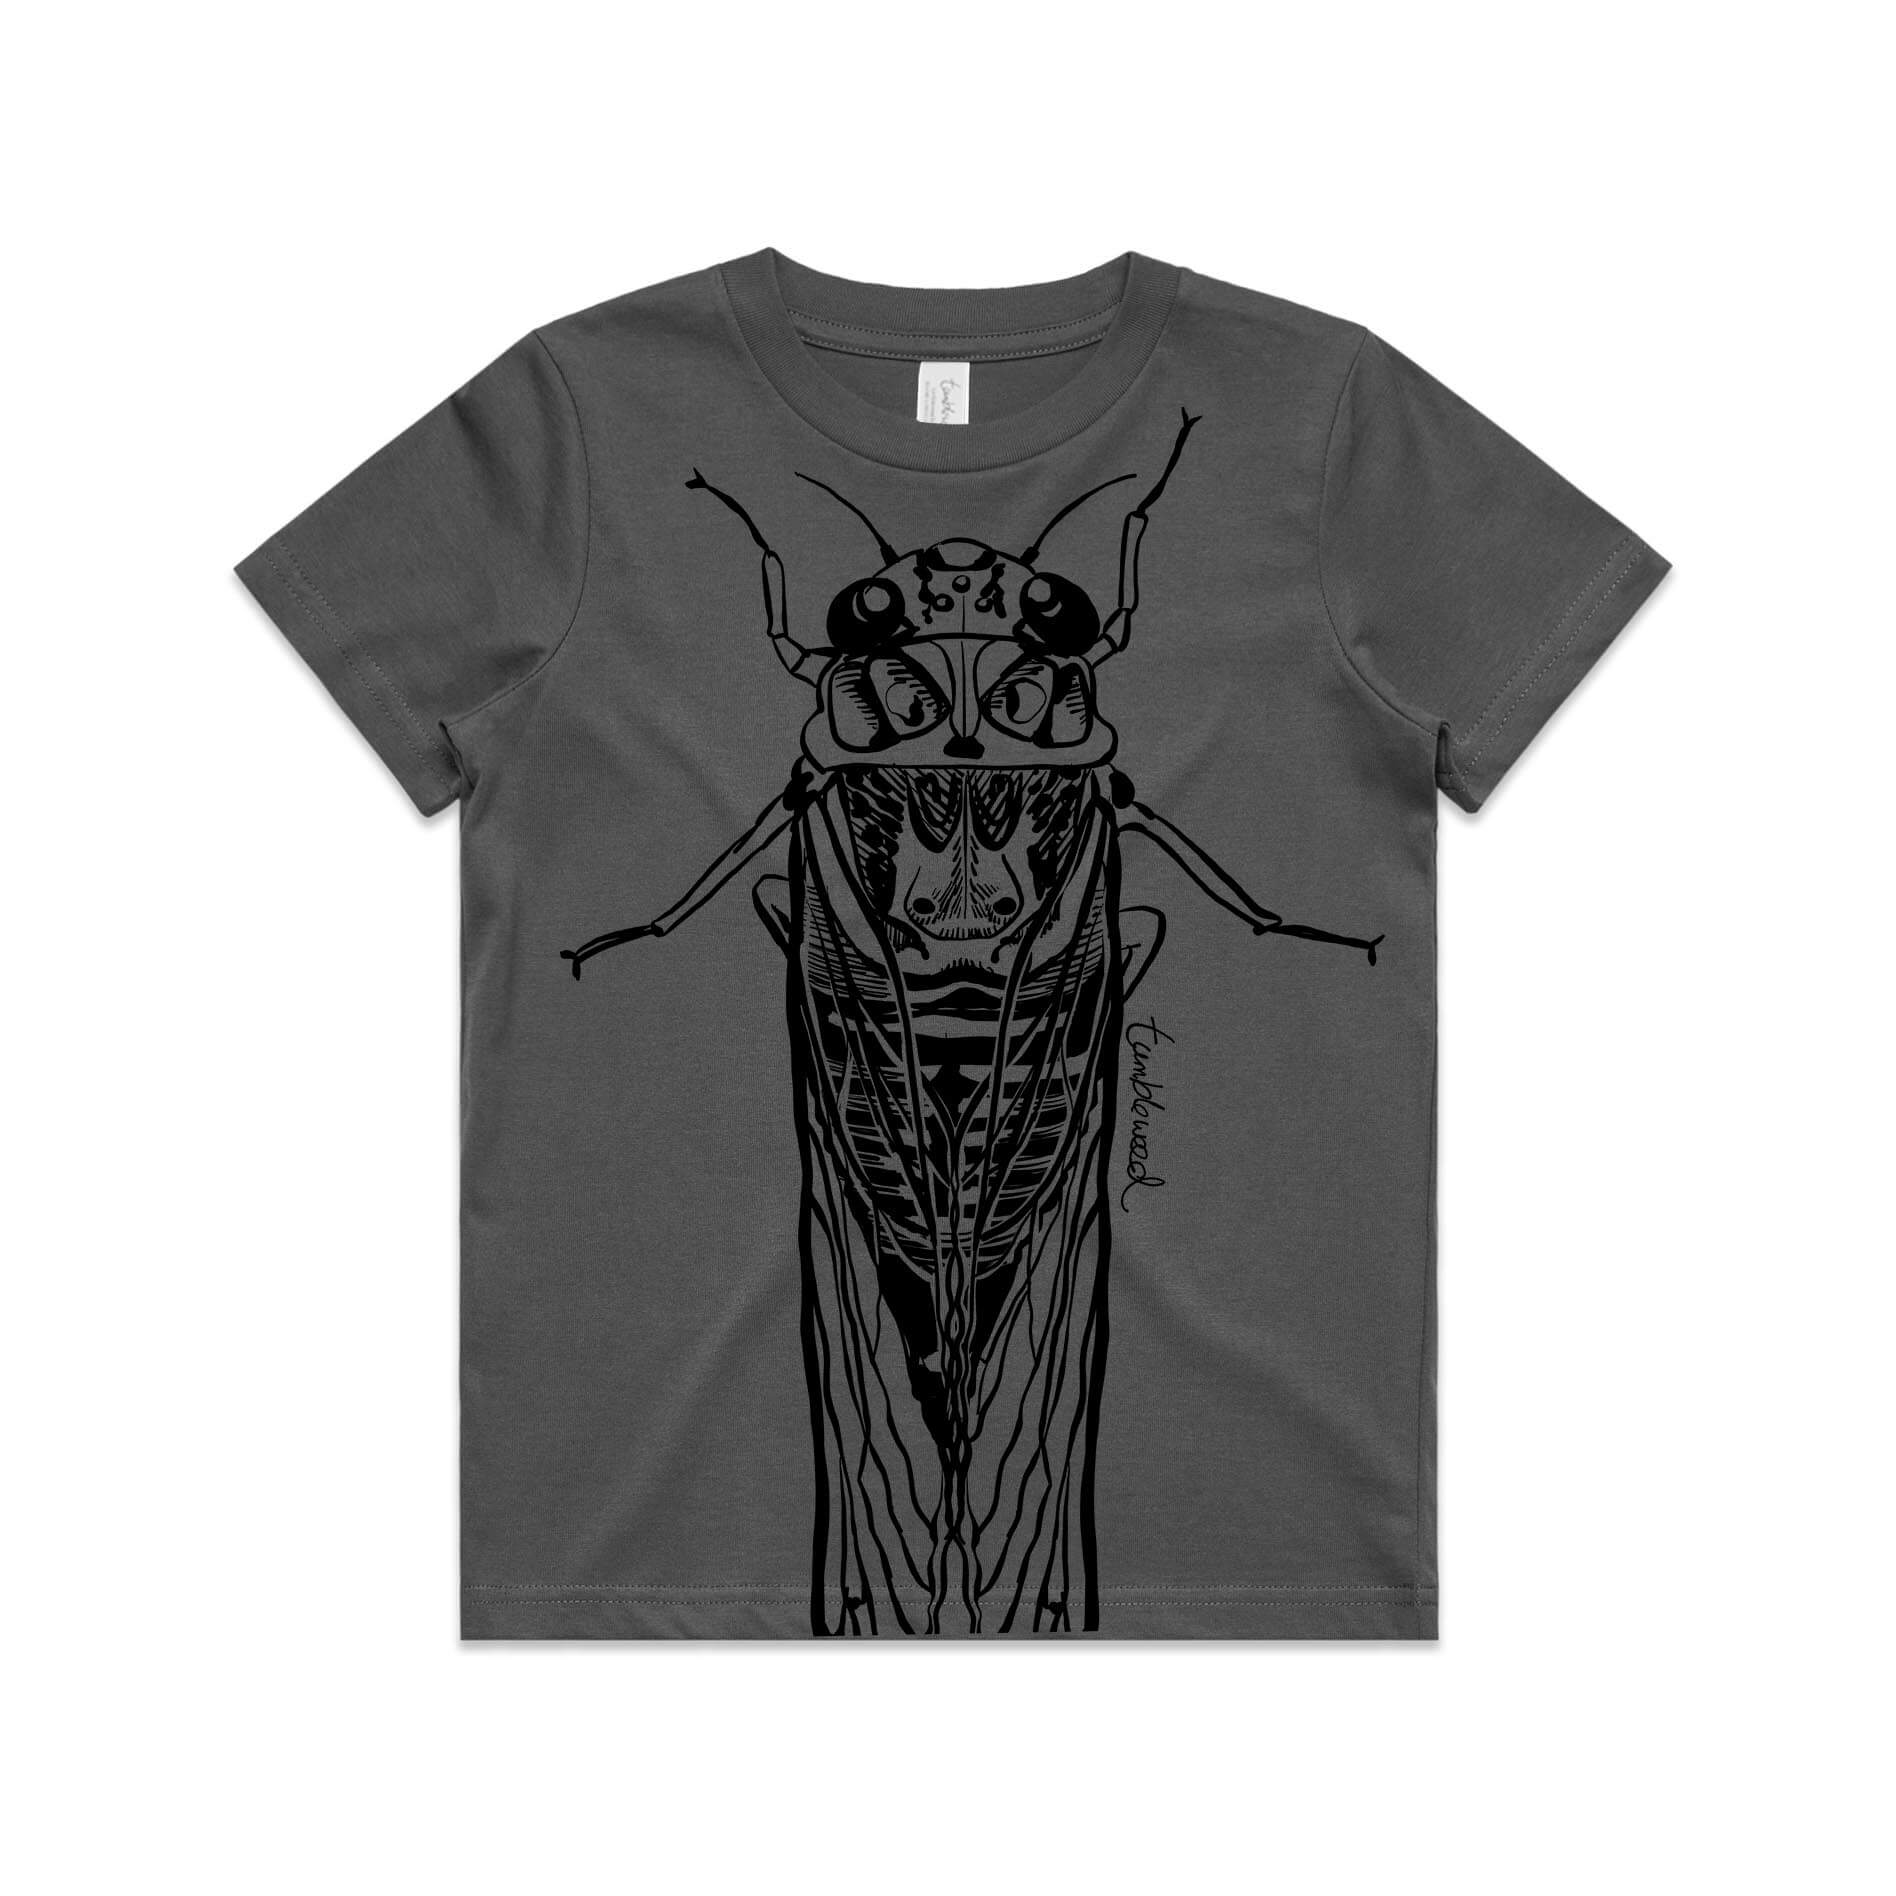 Charcoal, cotton kids' t-shirt with screen printed cicada/kihikihi-wawā design.